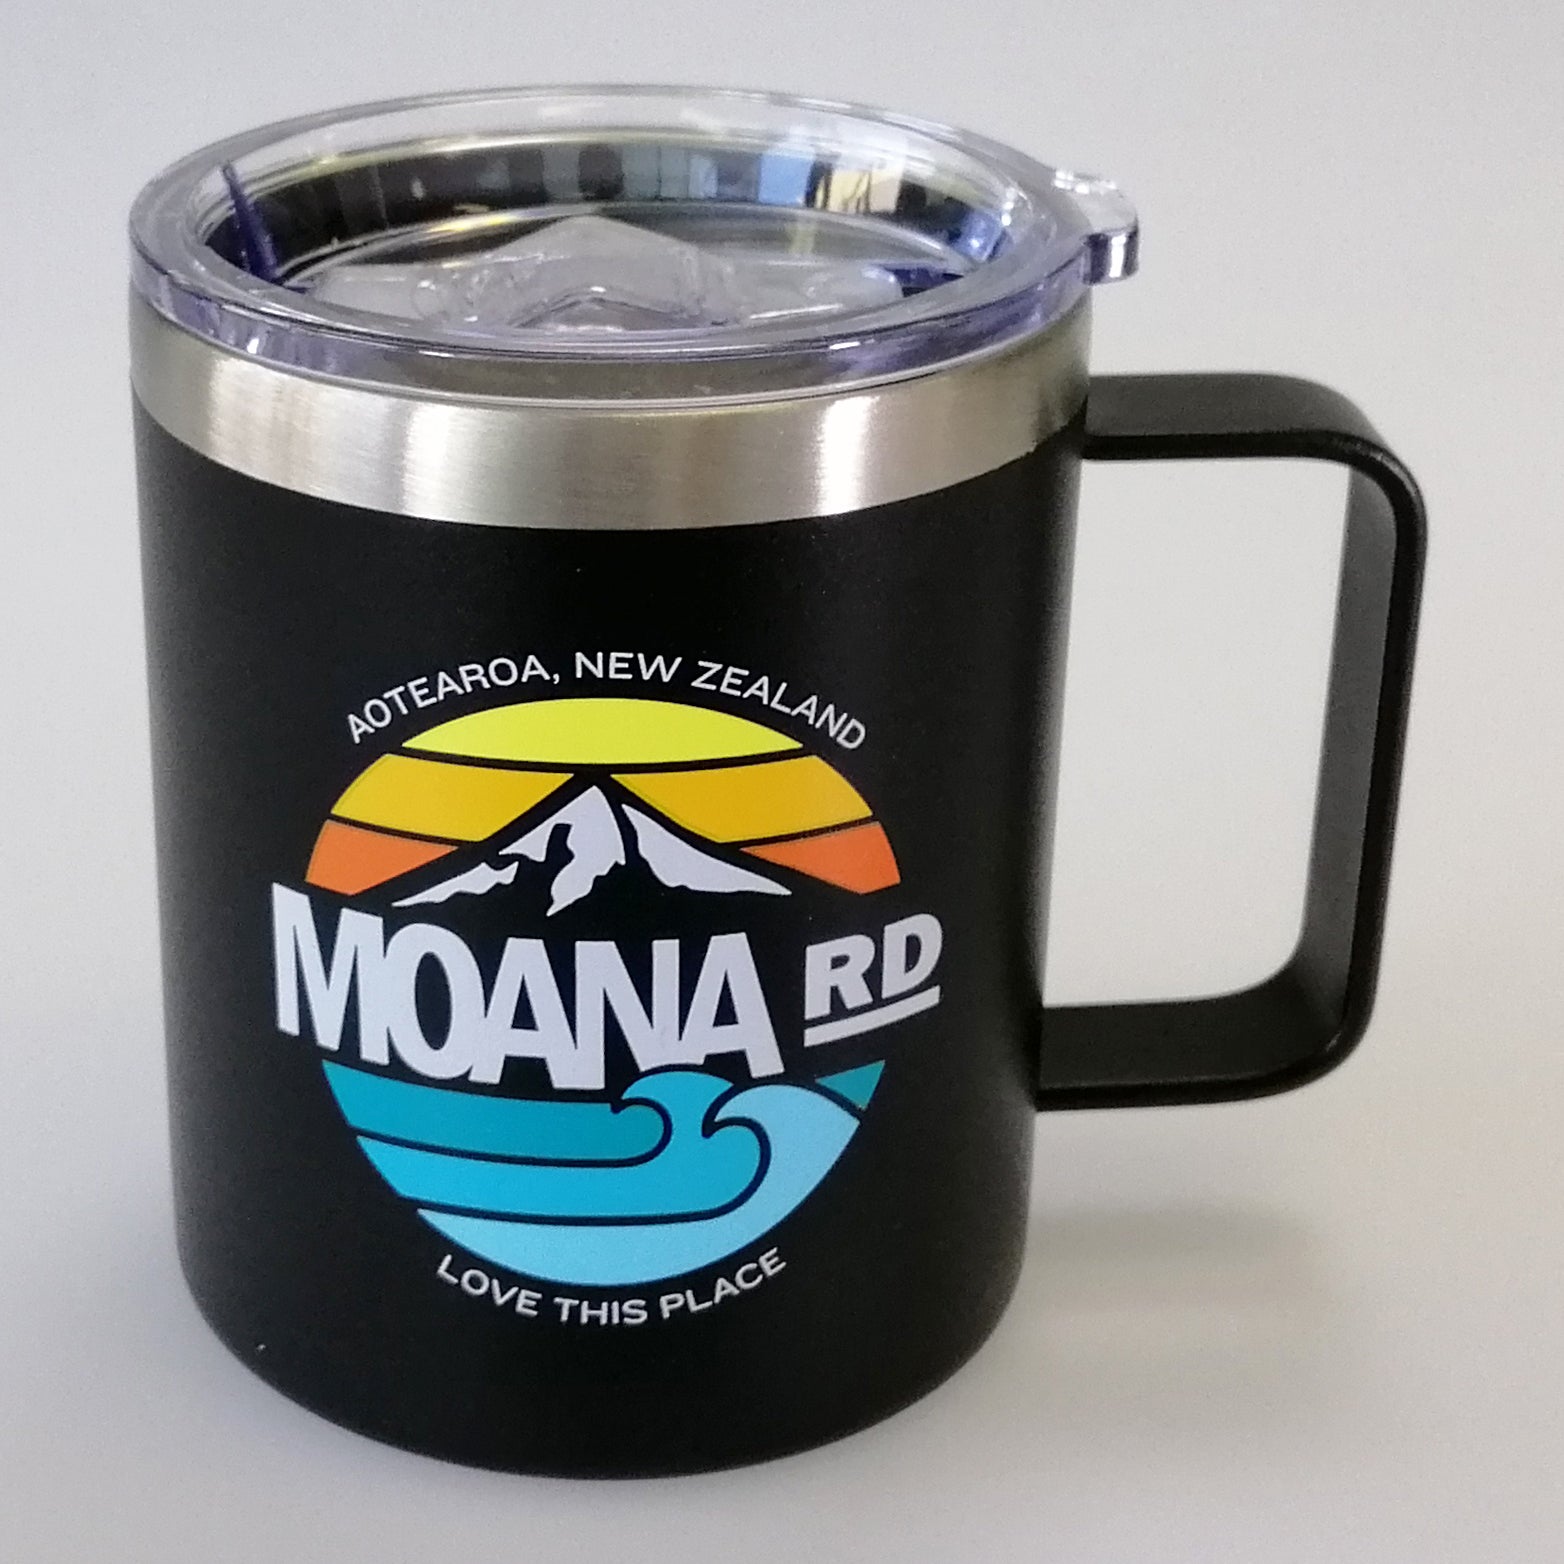 Moana Road - The Adventure Travel Mug